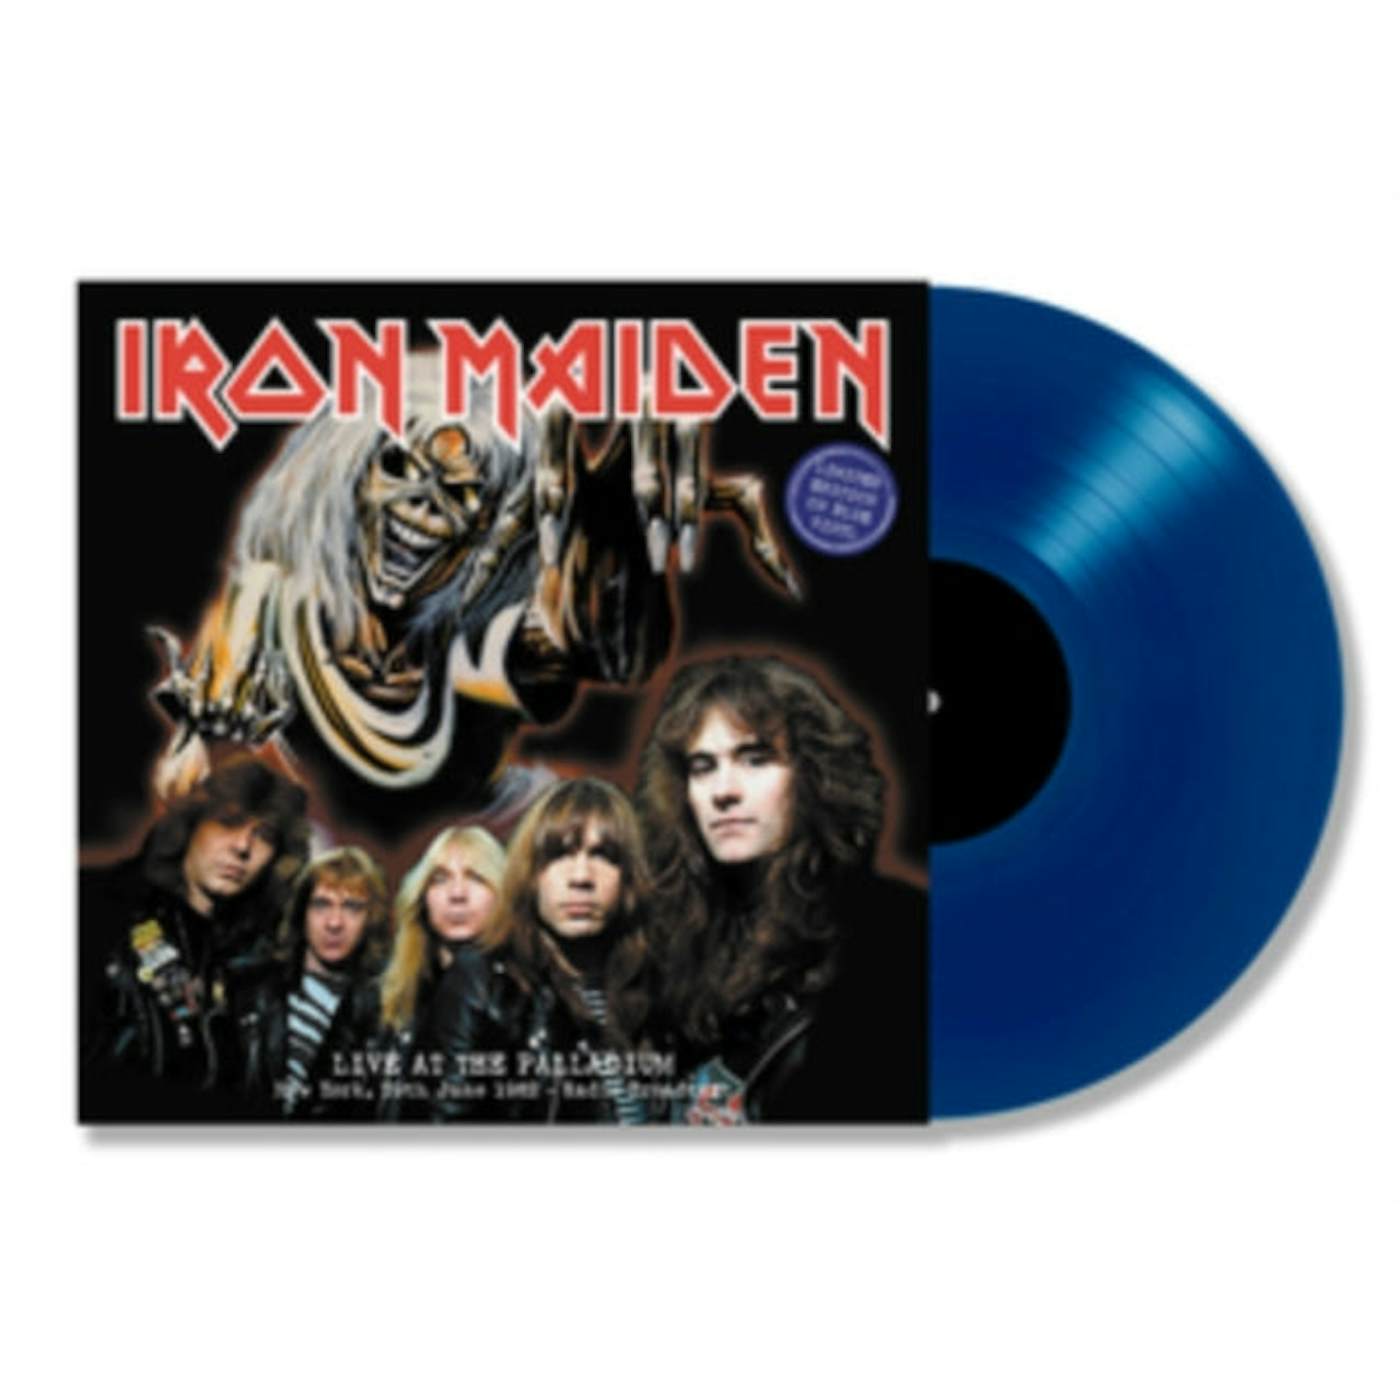 Iron Maiden LP - Live At Palladium. New York. 29Th June. 1982 - Radio Broadcast (Blue Vinyl)